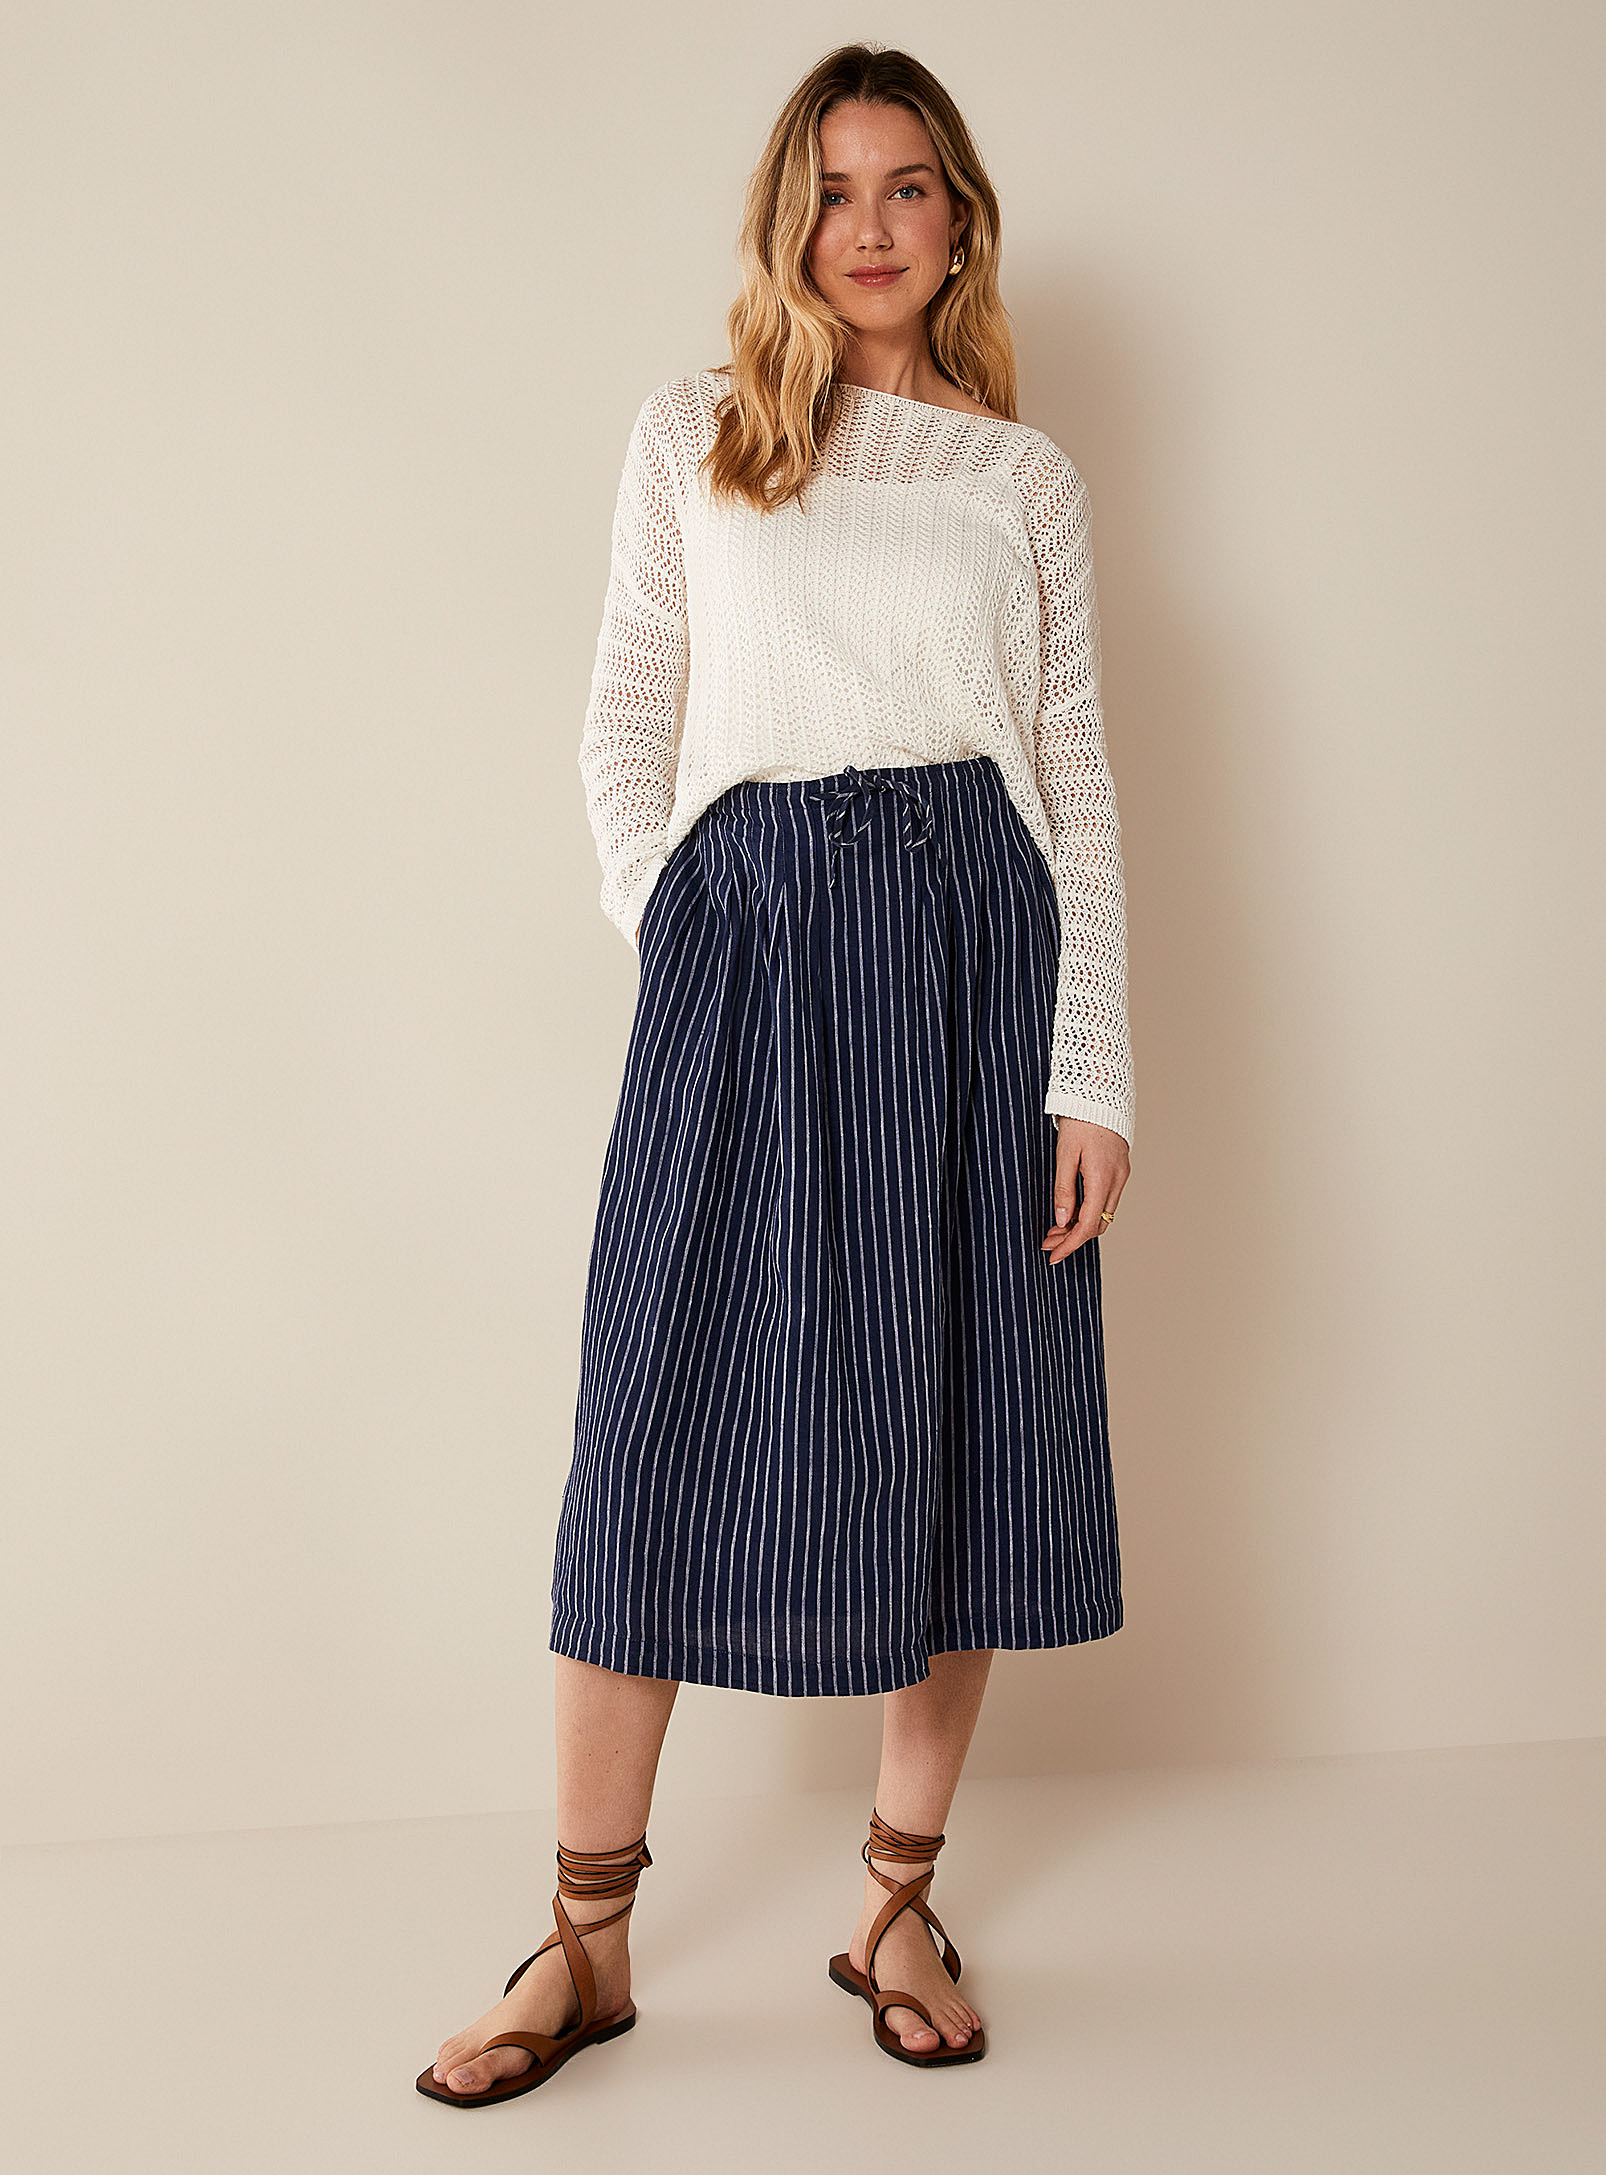 NAÏF - Women's Lia striped pure linen skirt